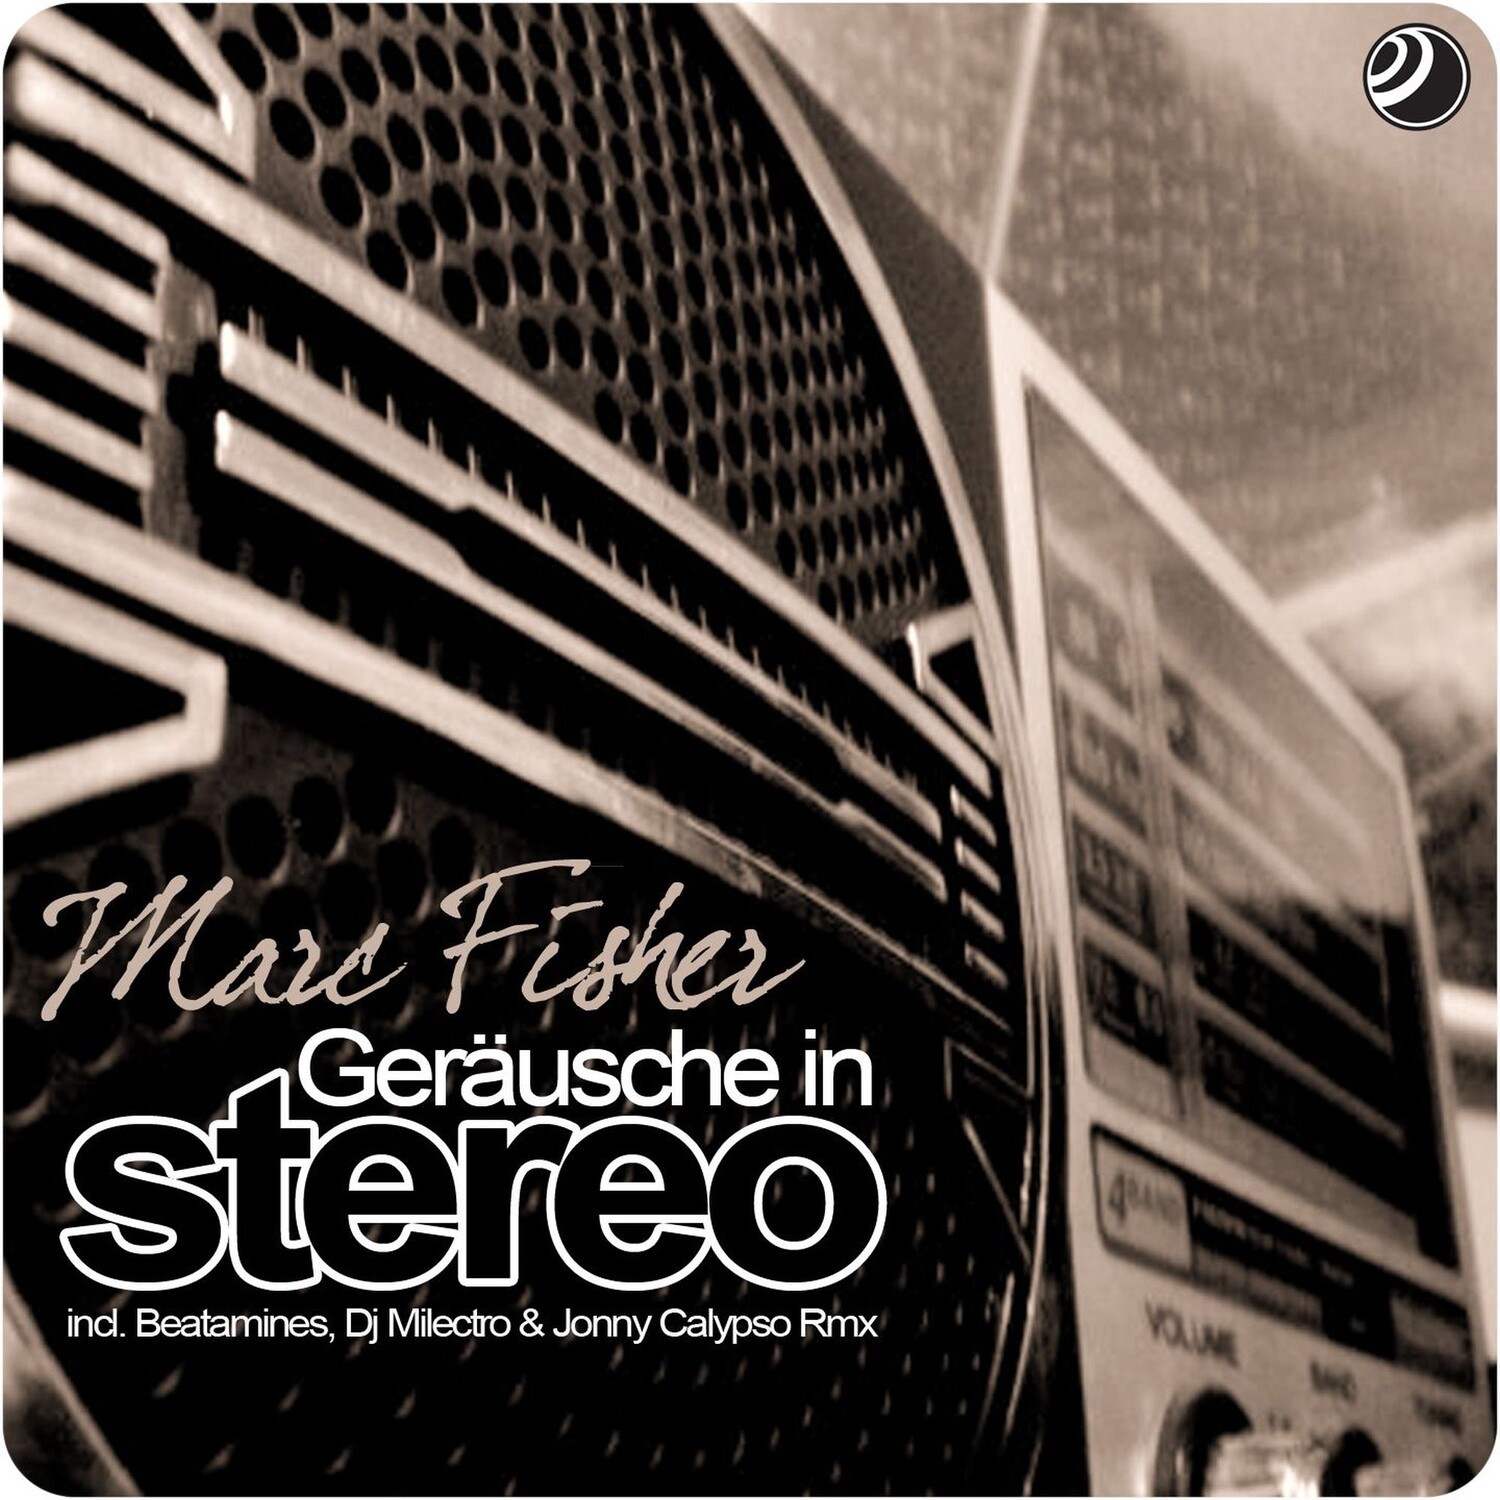 Ger usche in Stereo DJ Milectro, Jonny Calypso Remix